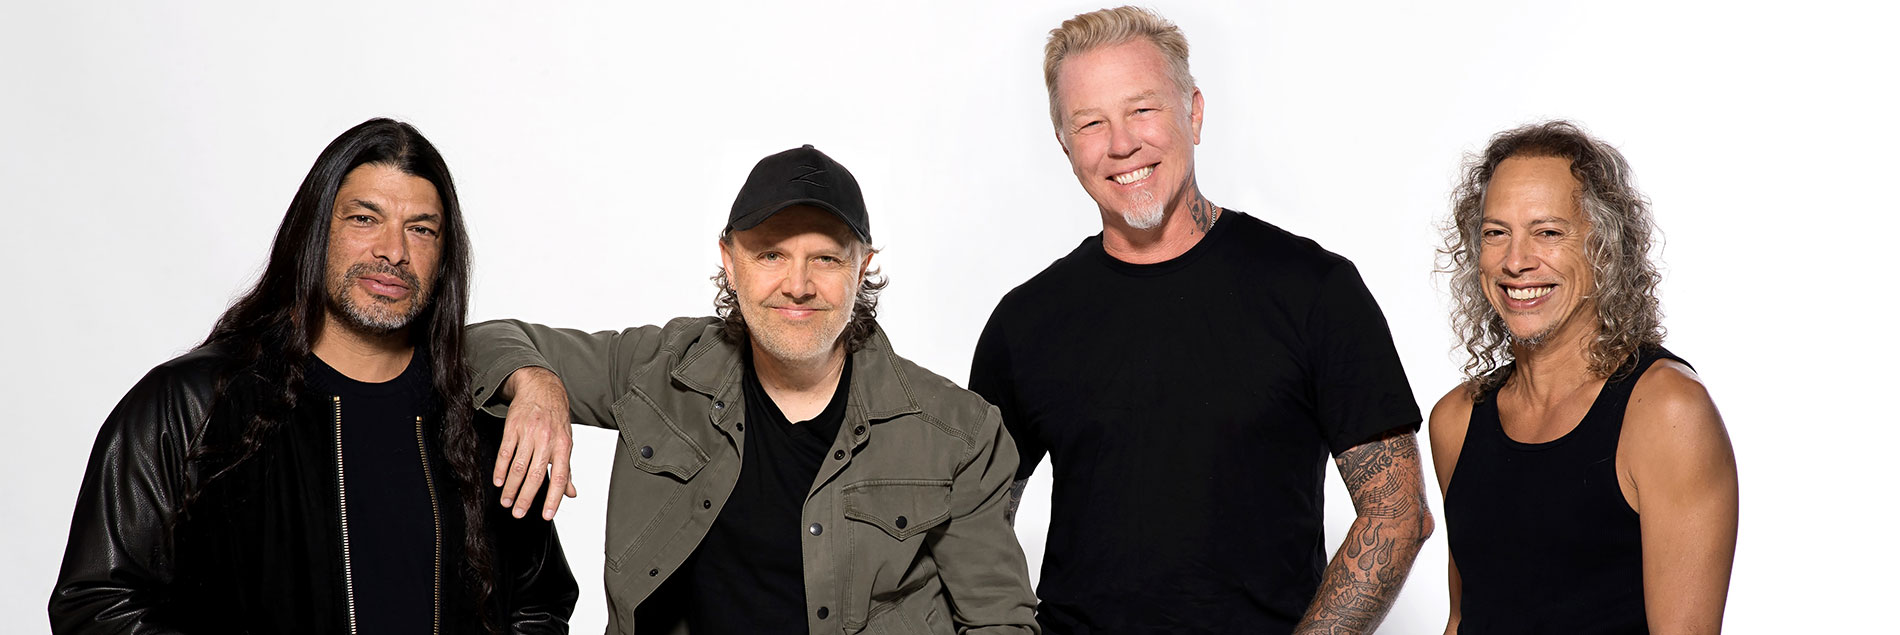 Metallica band members Robert Trujillo, Lars Ulrich, James Hetfield, and Kirk Hammett